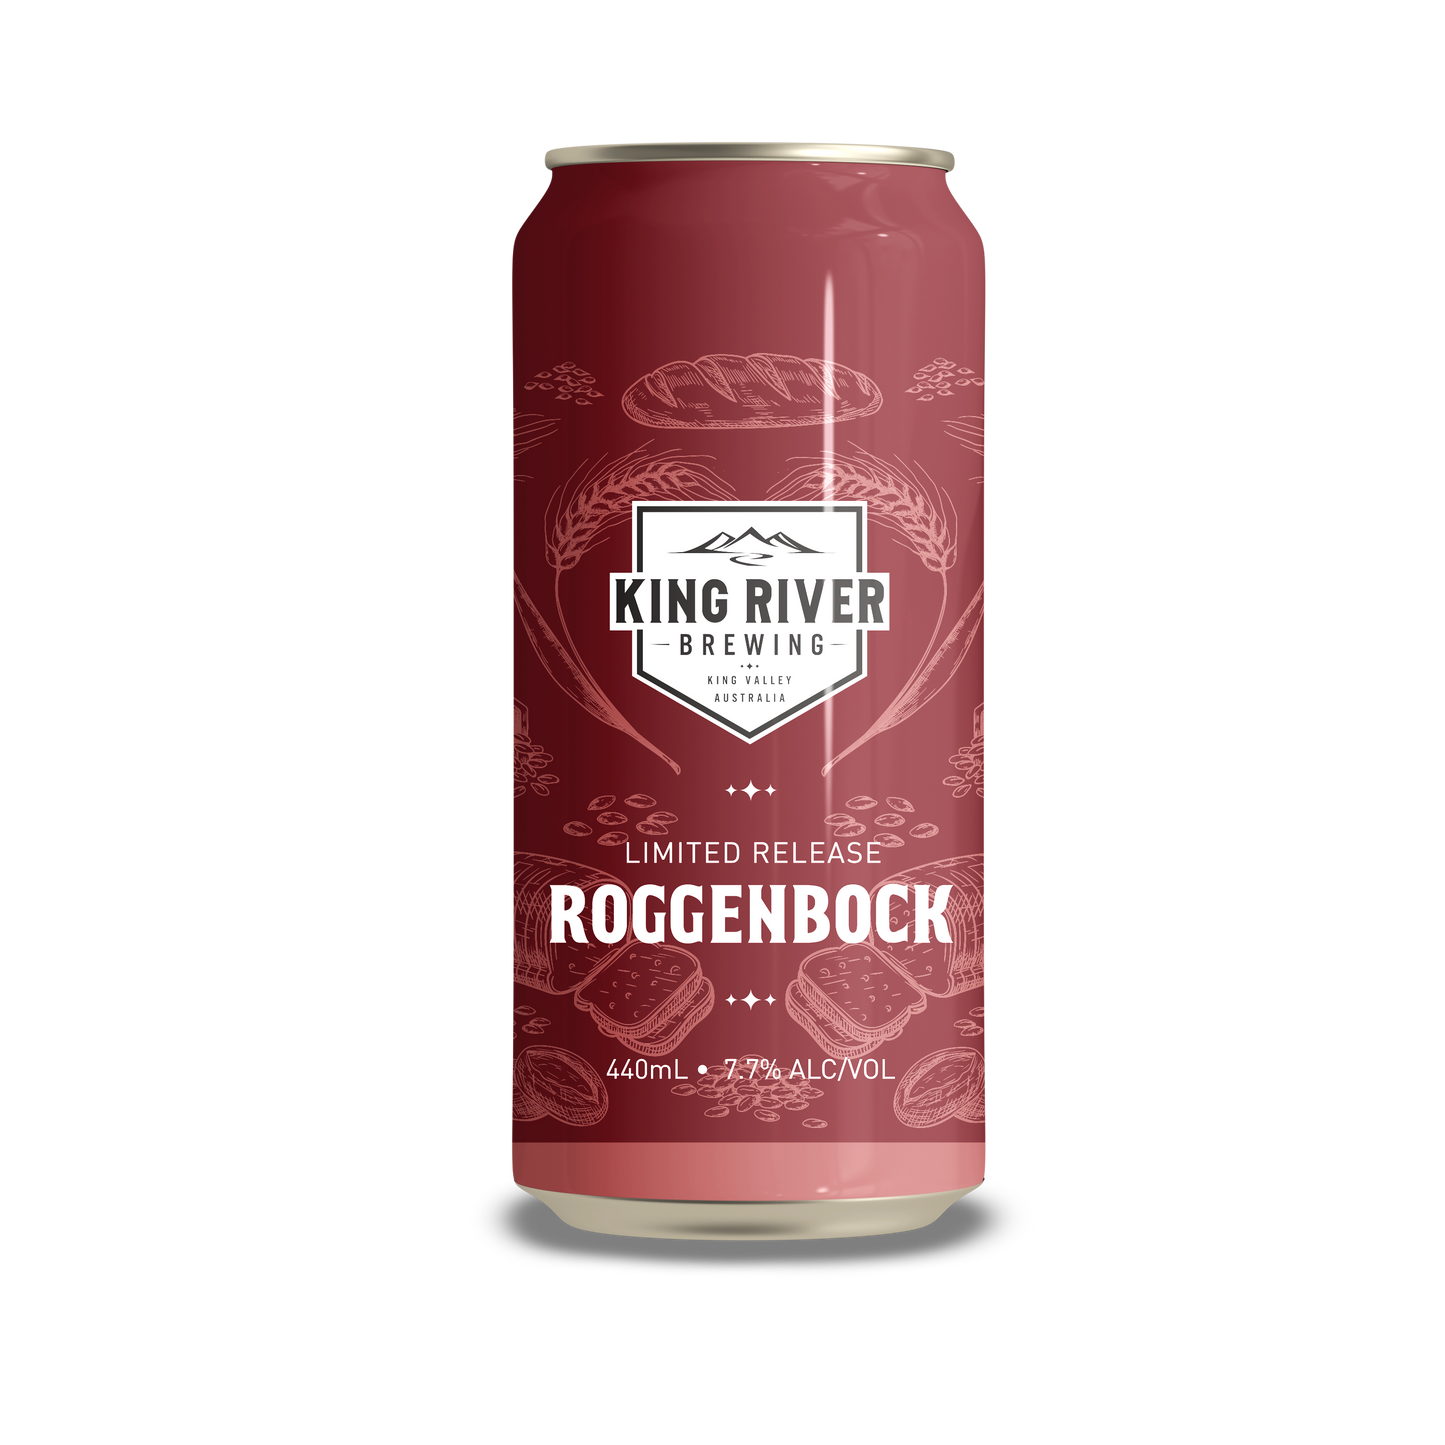 Roggenbock - Strong Rye